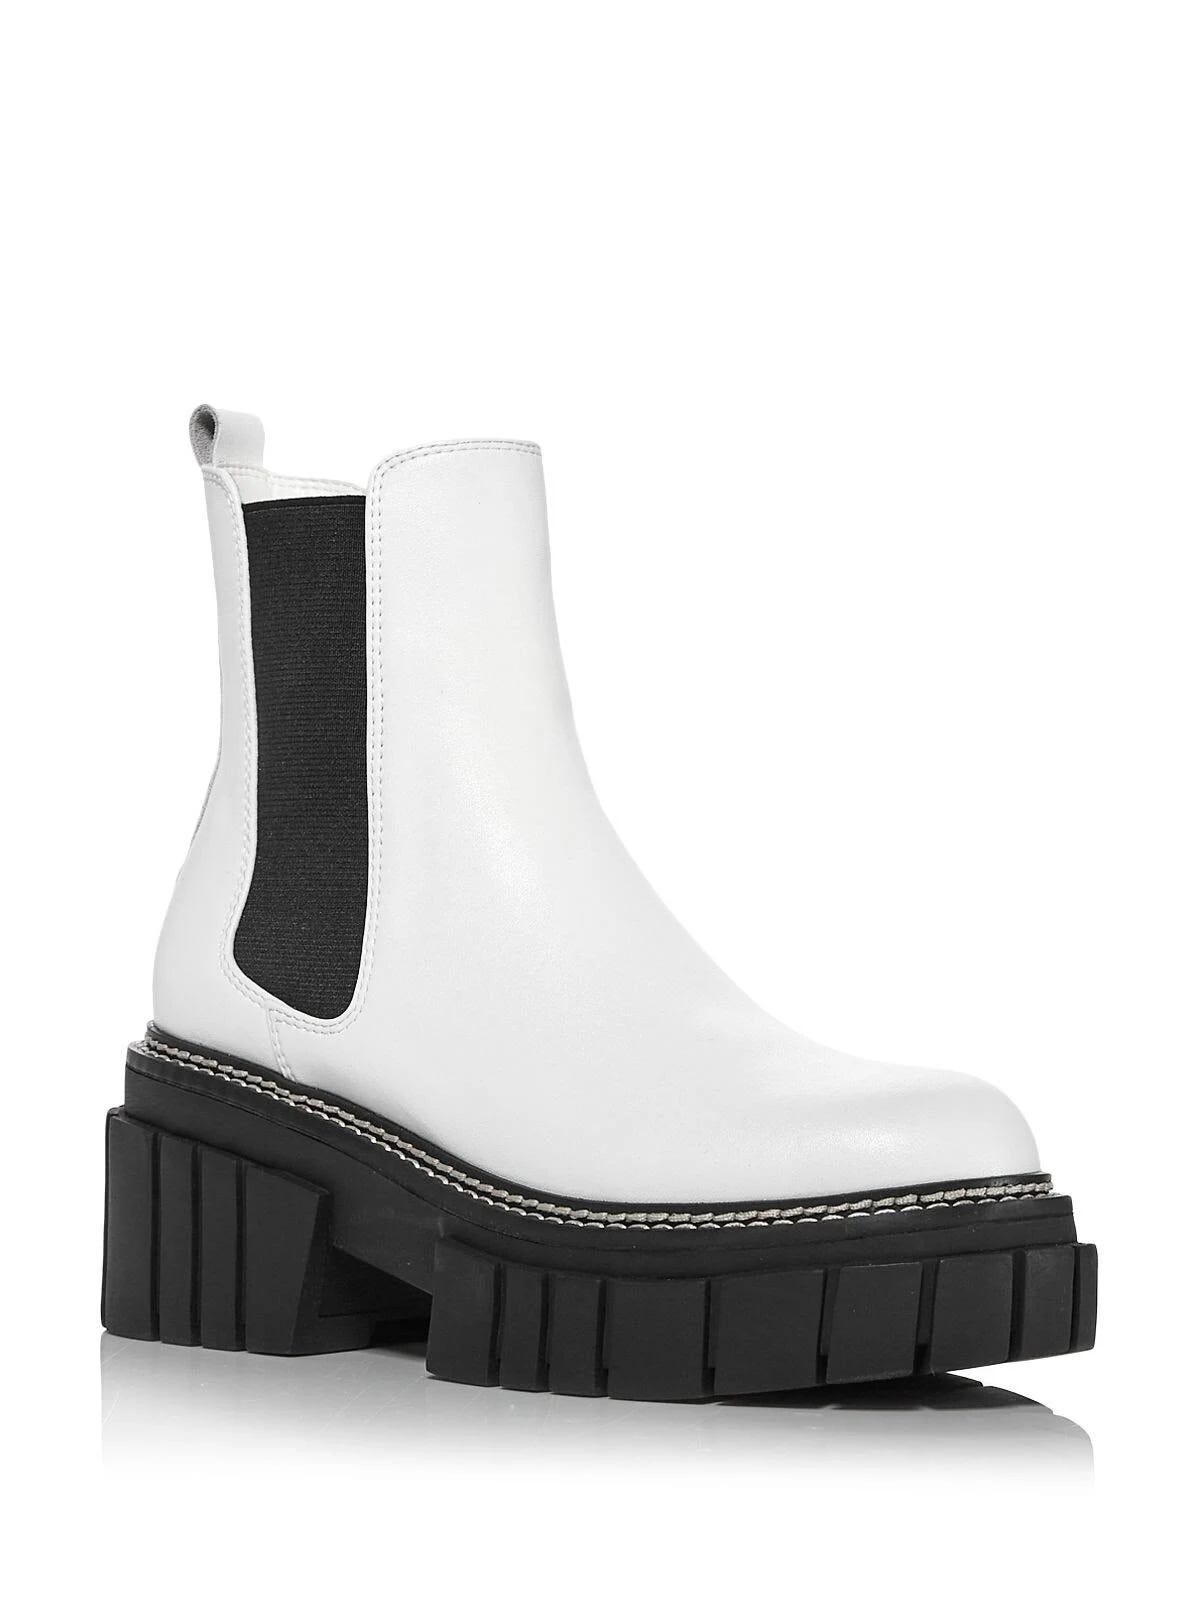 Aqua White Lug Sole Platform Boots - Casual Chic Style | Image